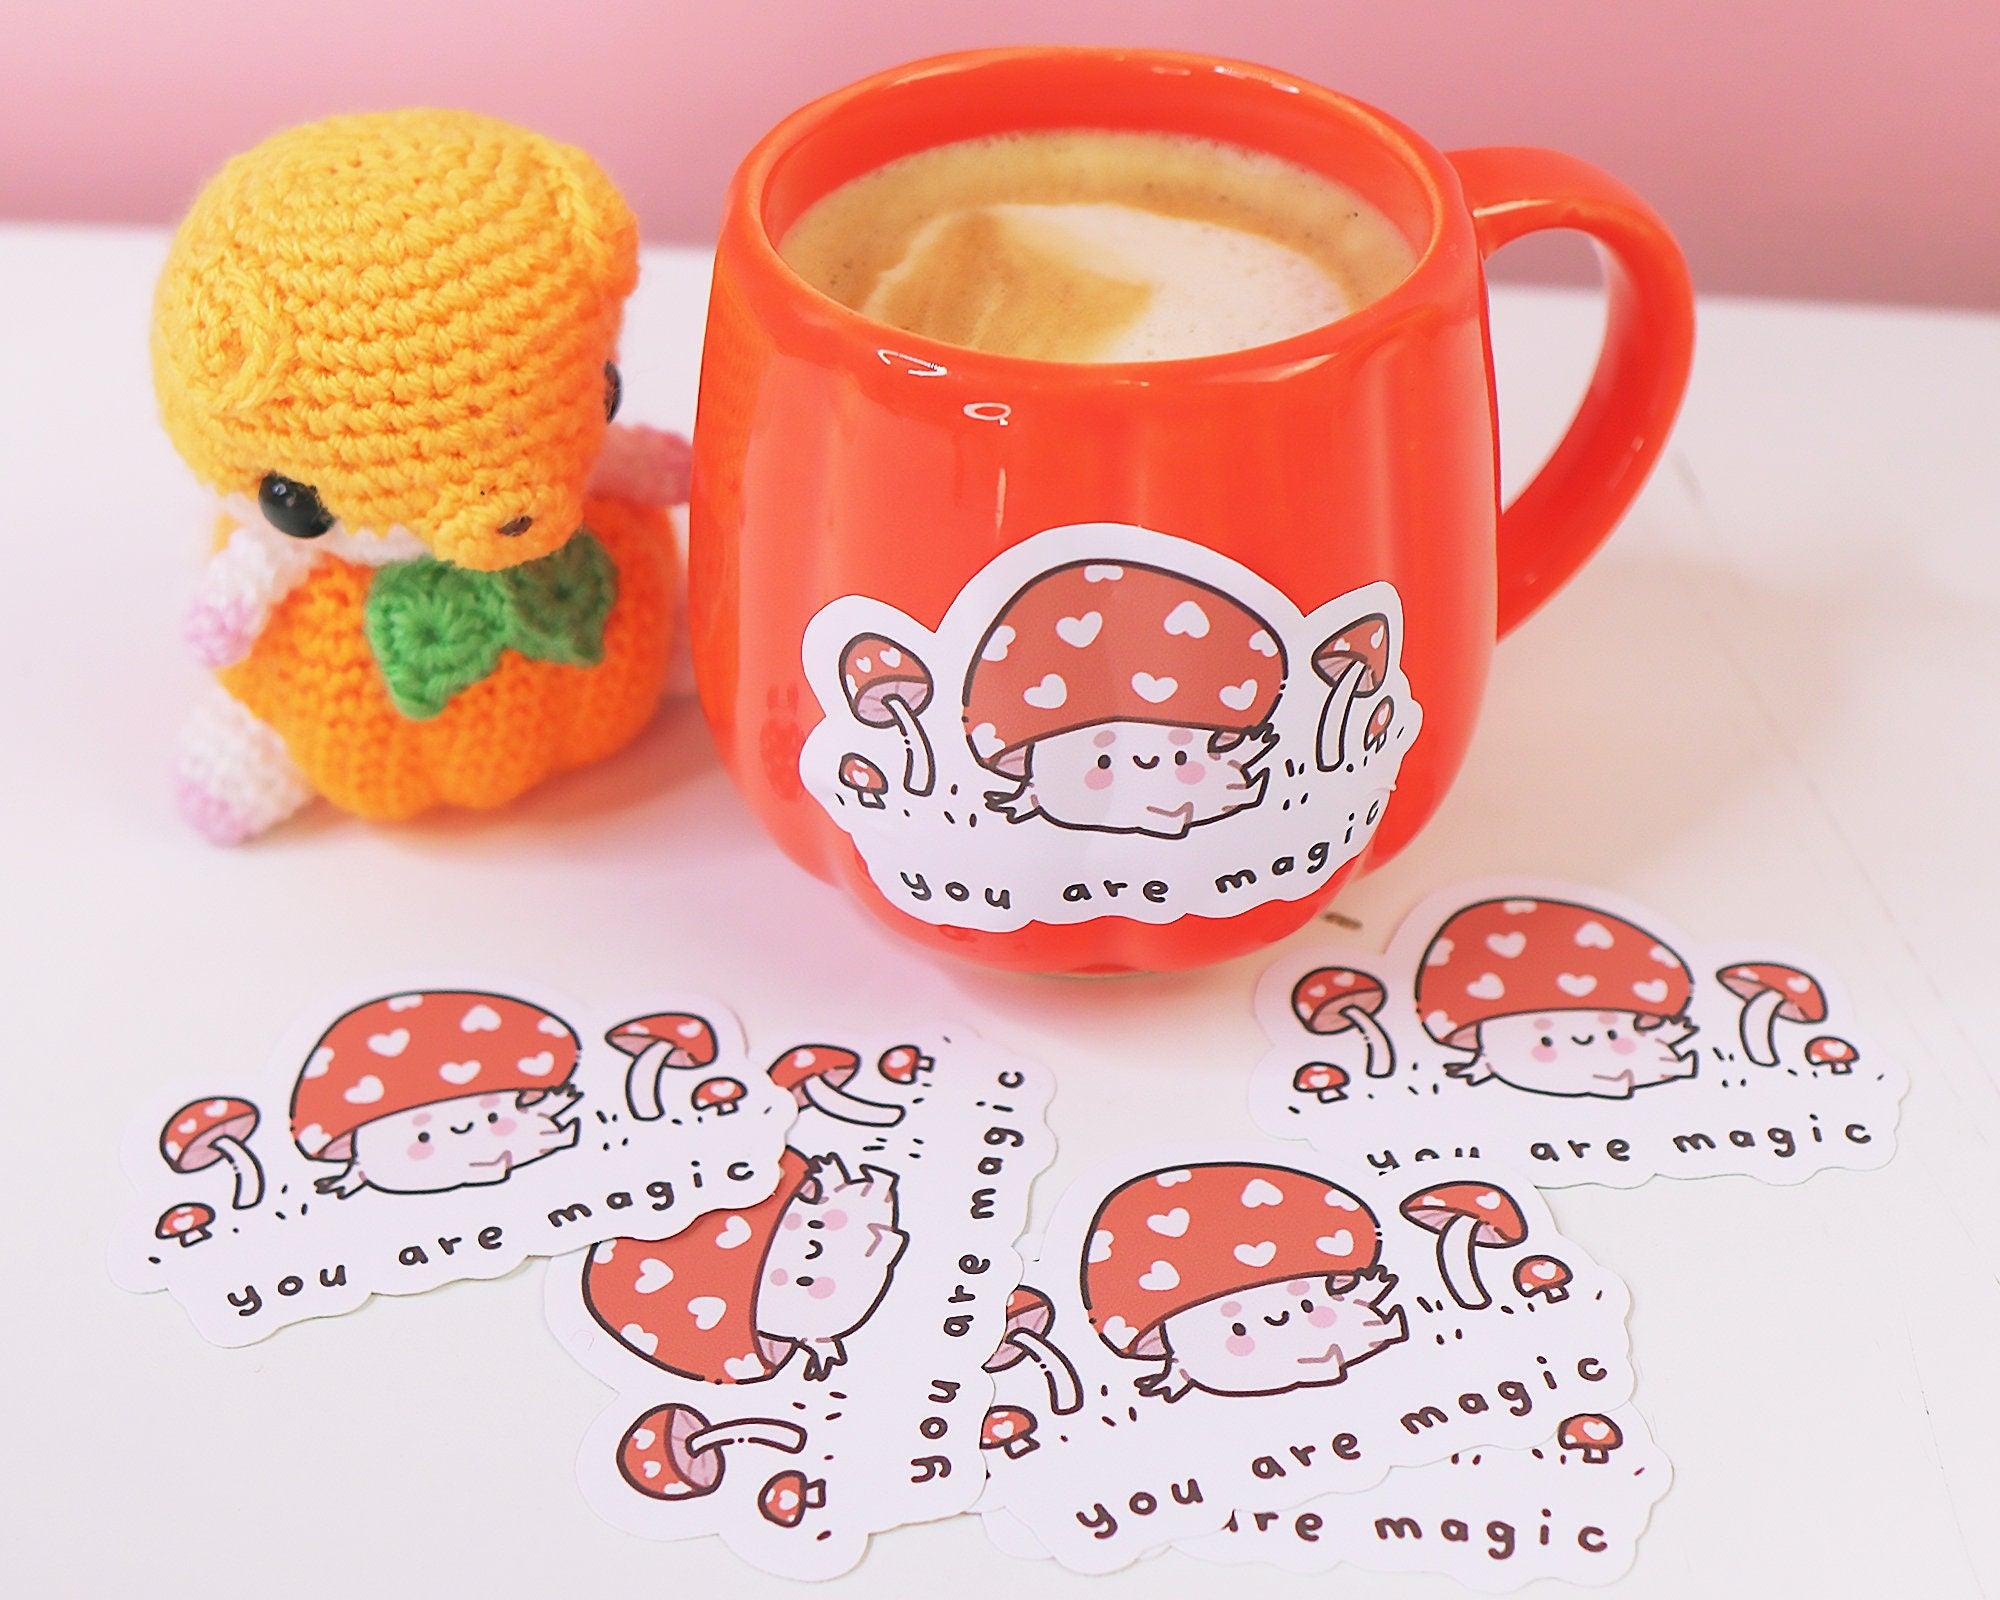 You are Magic ~ Kawaii Mushroom Waterproof Vinyl Die Cut Sticker - Katnipp Illustrations